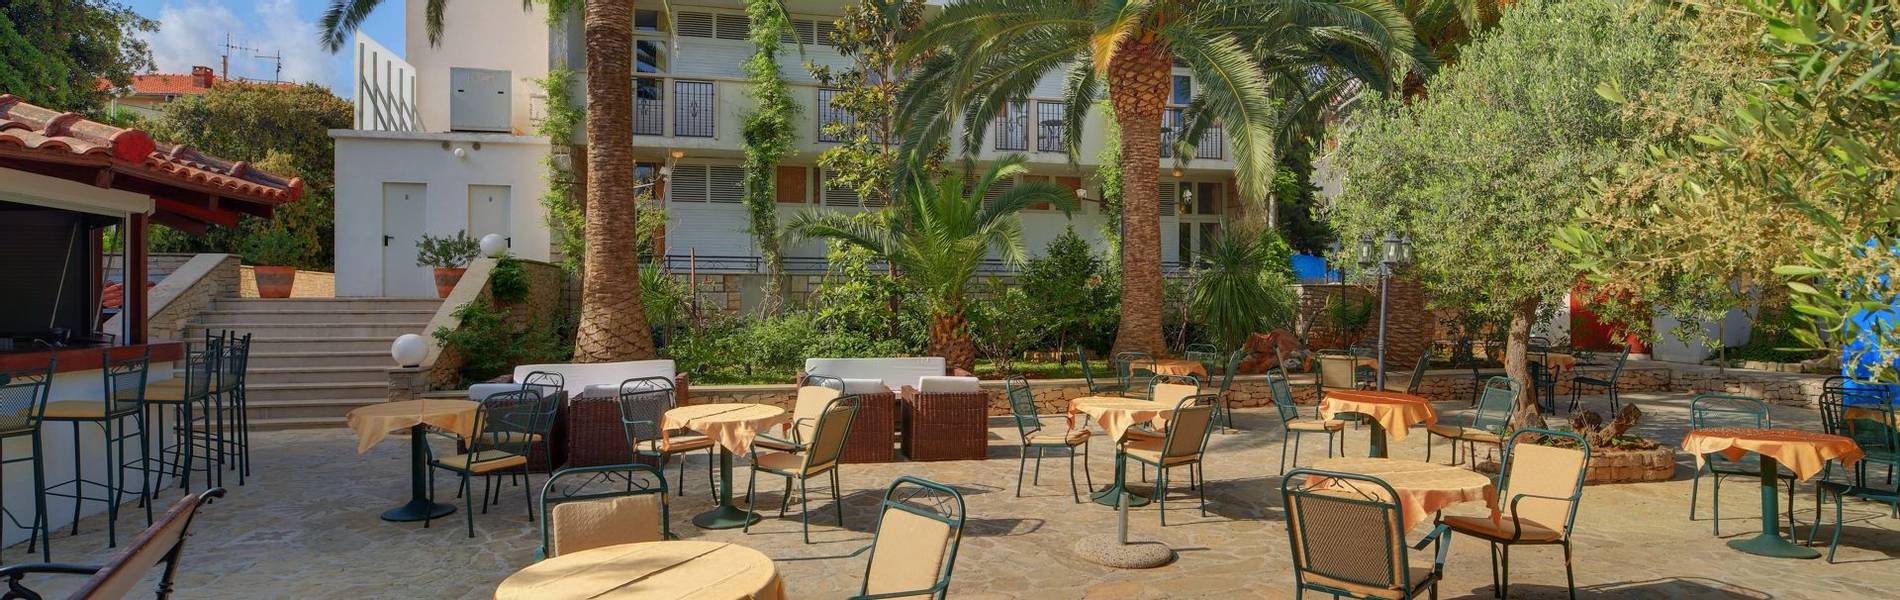 Hotel Villa ADRIATICA 2014 ZFacade Garden3 9X19  panorama 32MB.jpg